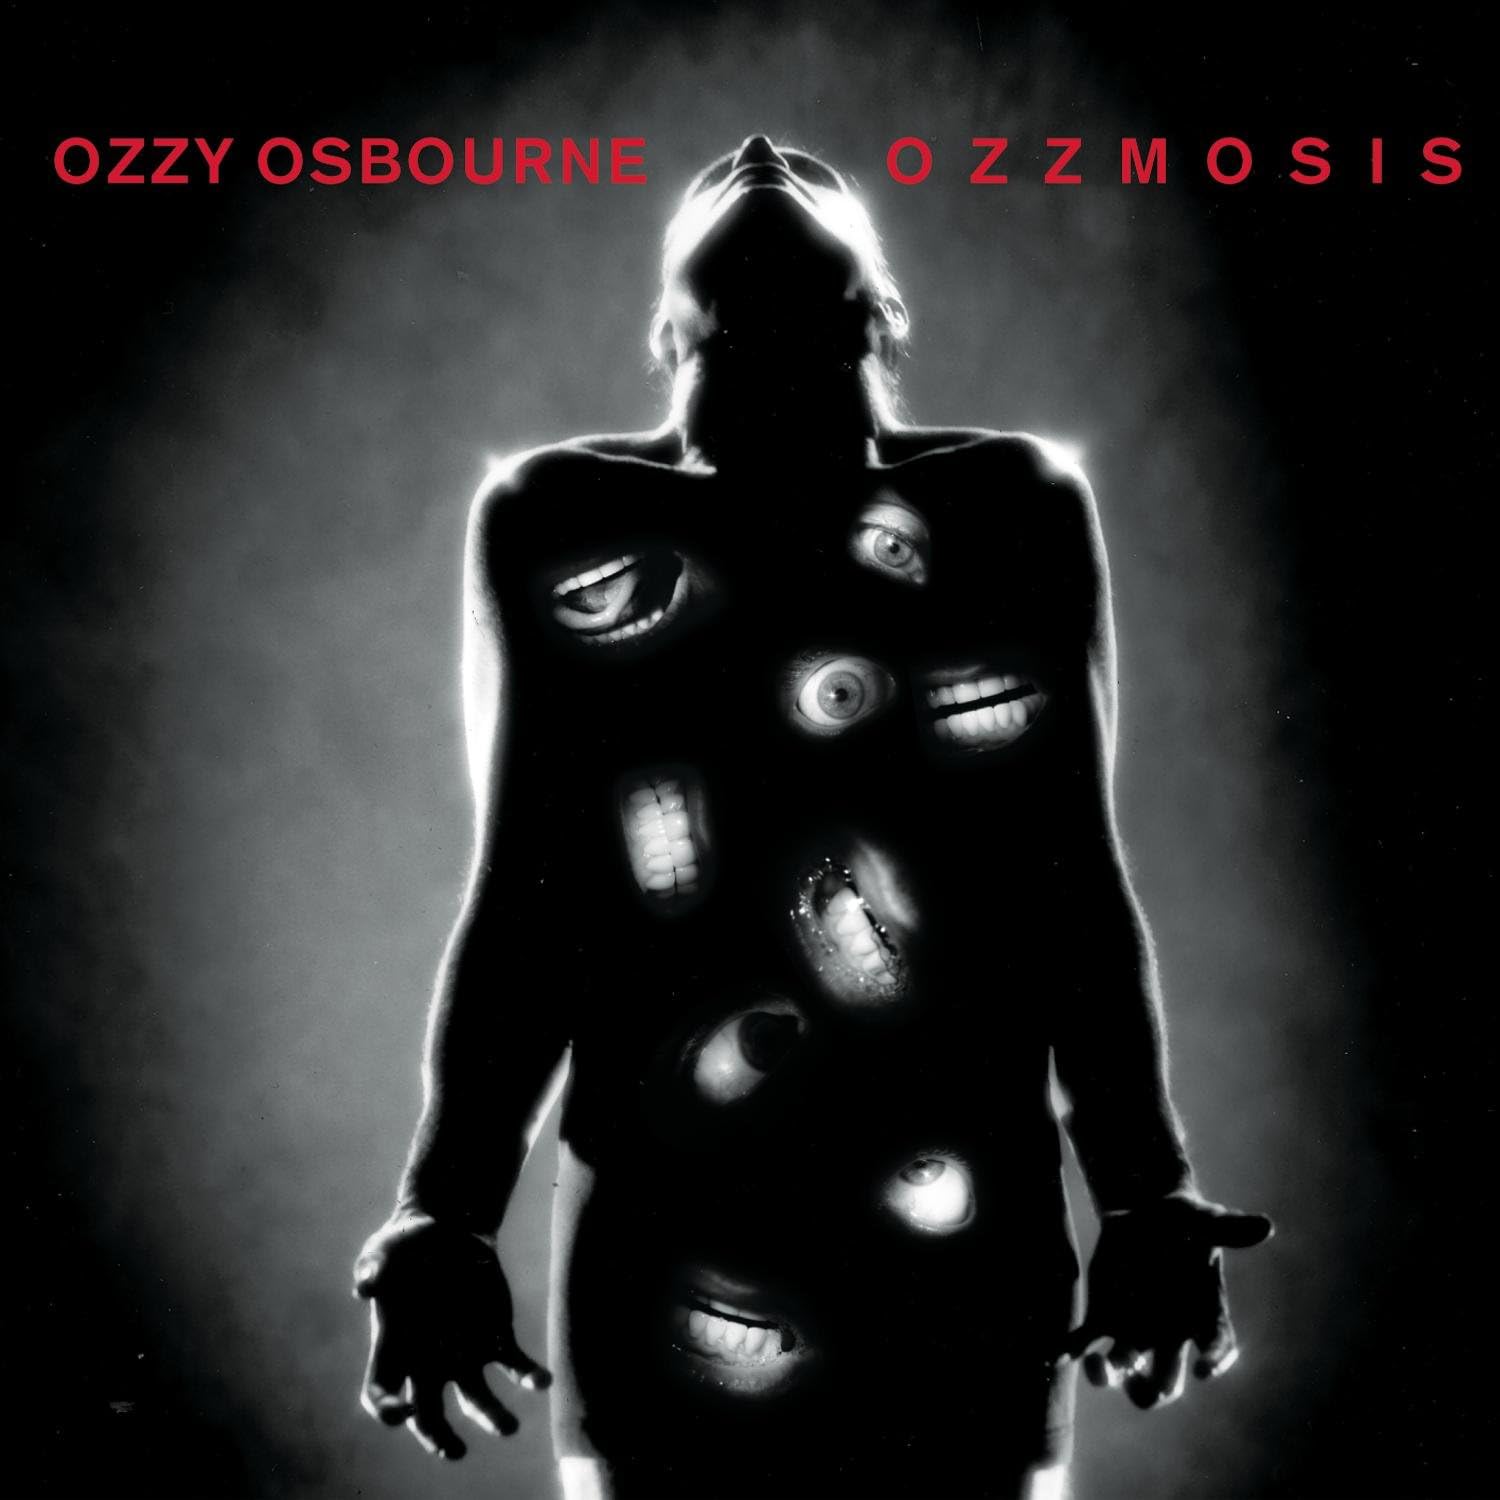 Ozzy Osbourne Ozzmosis (2002, CD)